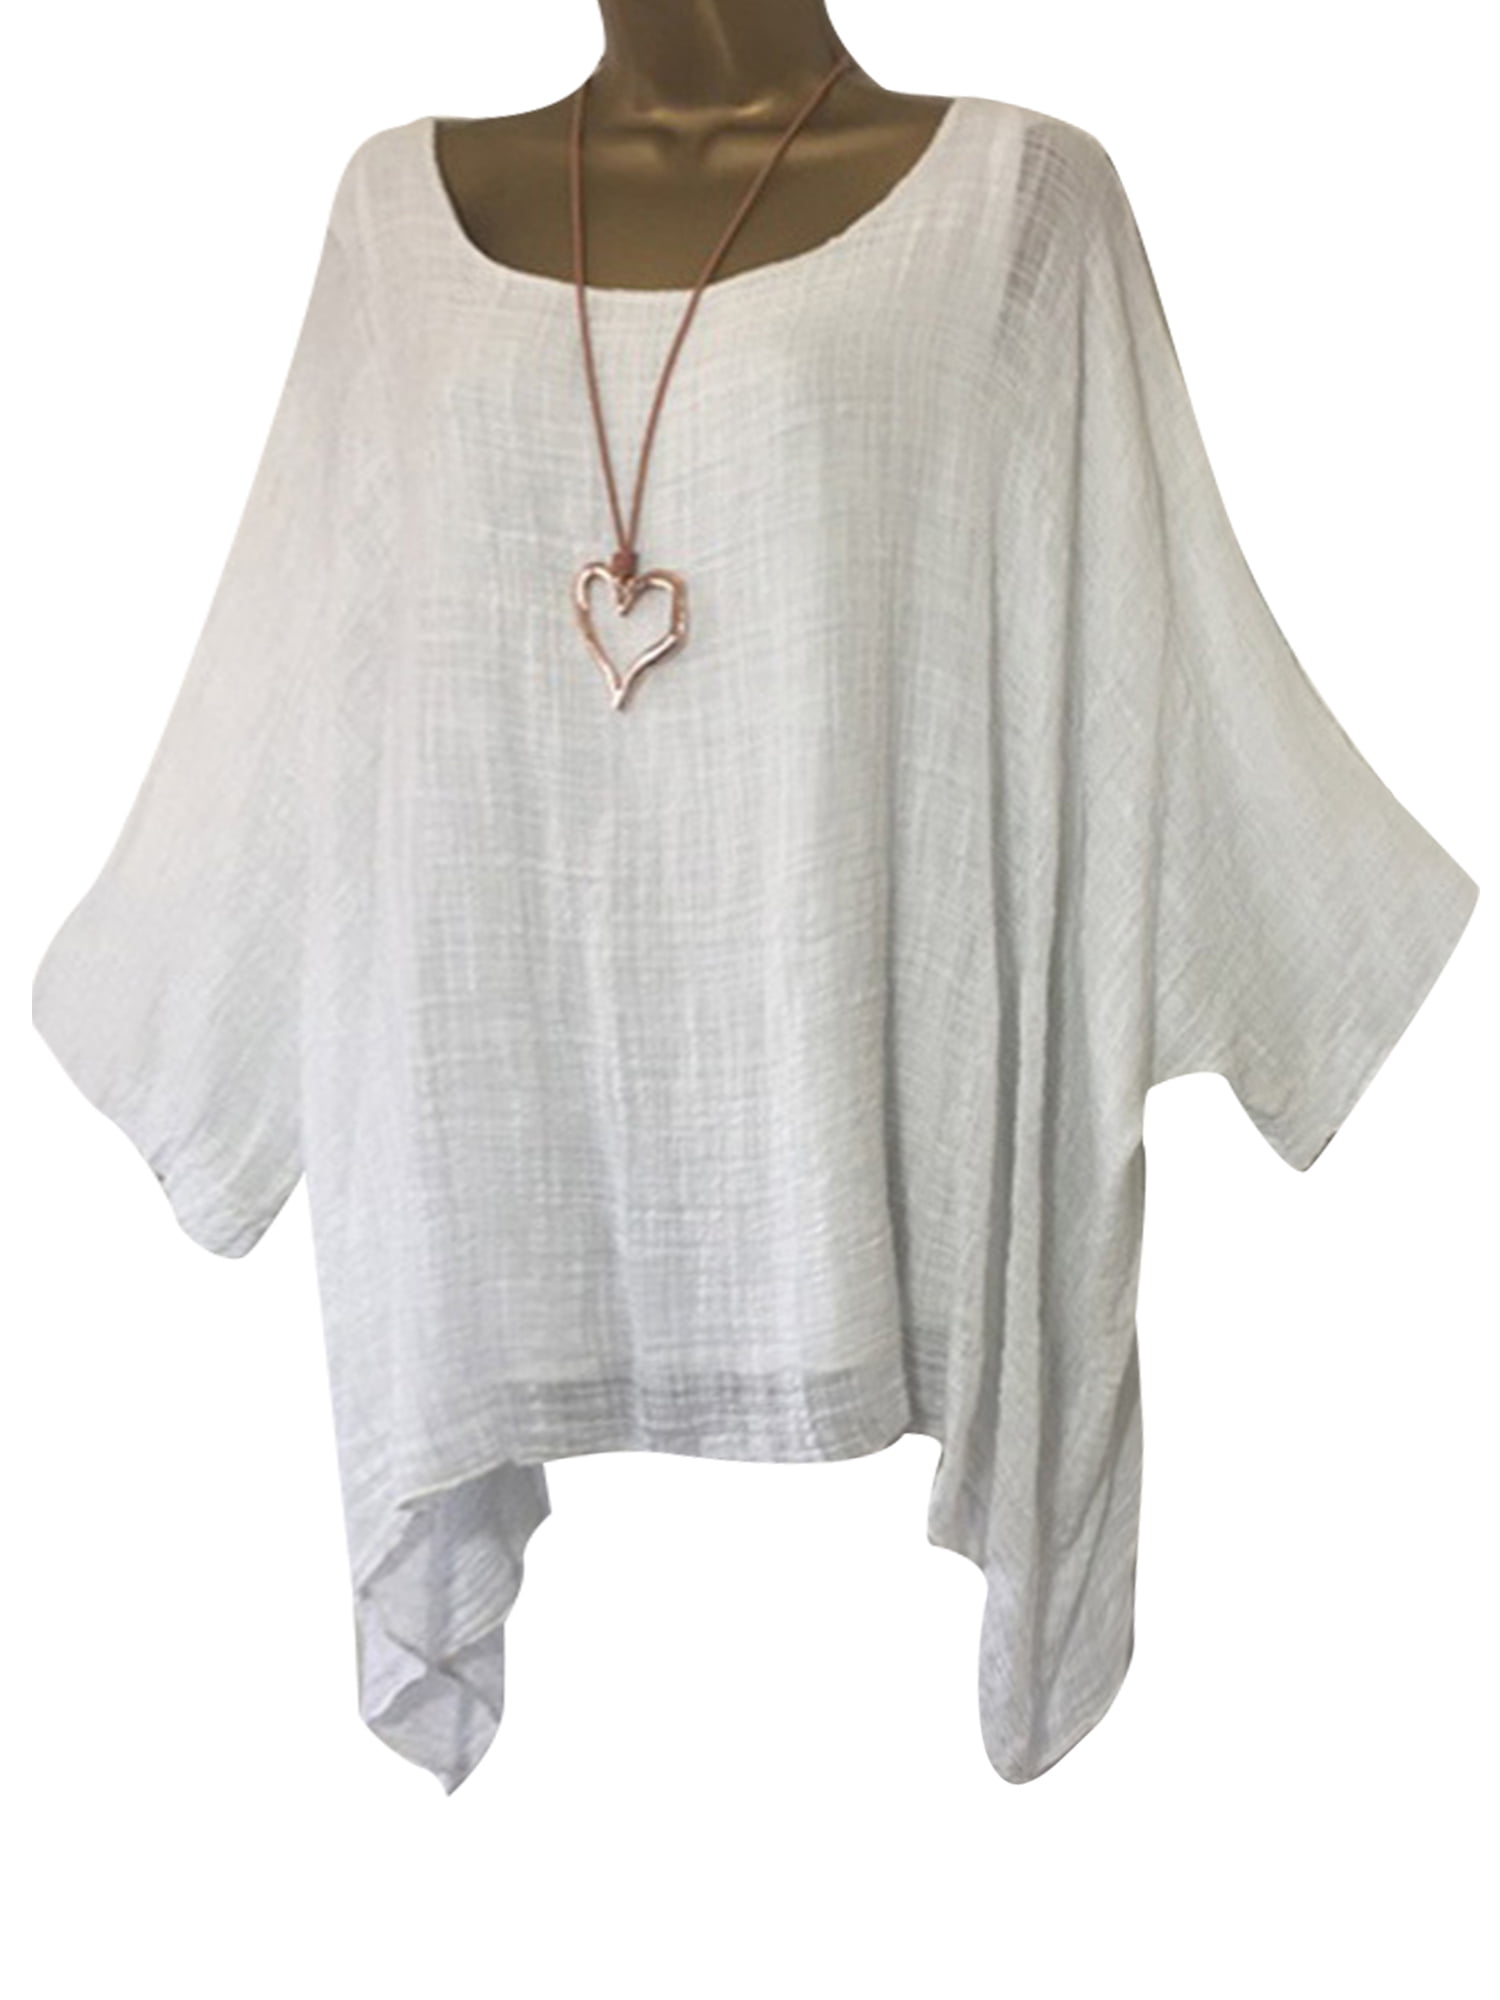 Women Summer Cotton Linen Tunic Tops Half Sleeve V Neck Irregular Hem Tees Shirts Vintage Loose Fit Plus Size Blouse 